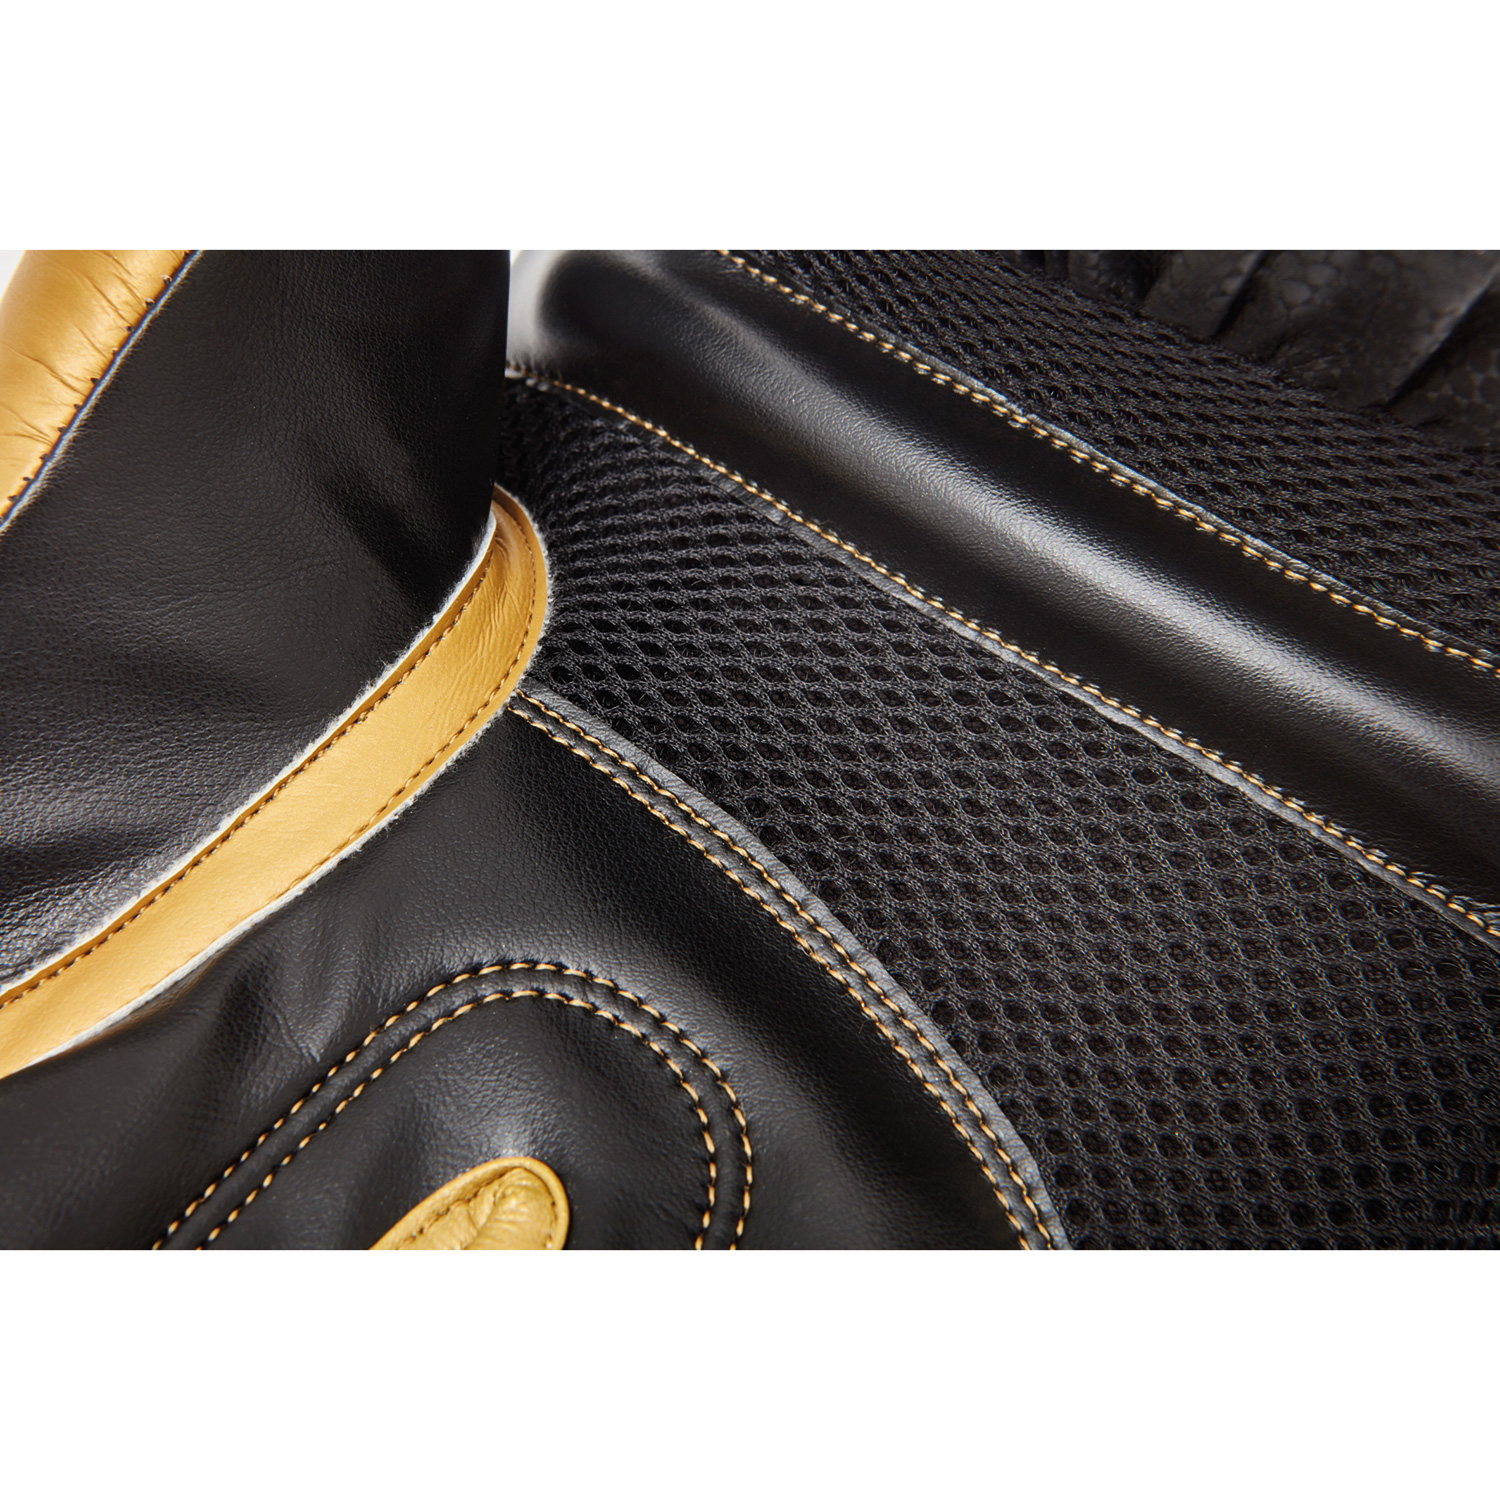 Reebok boxing gloves gold/black 16 oz